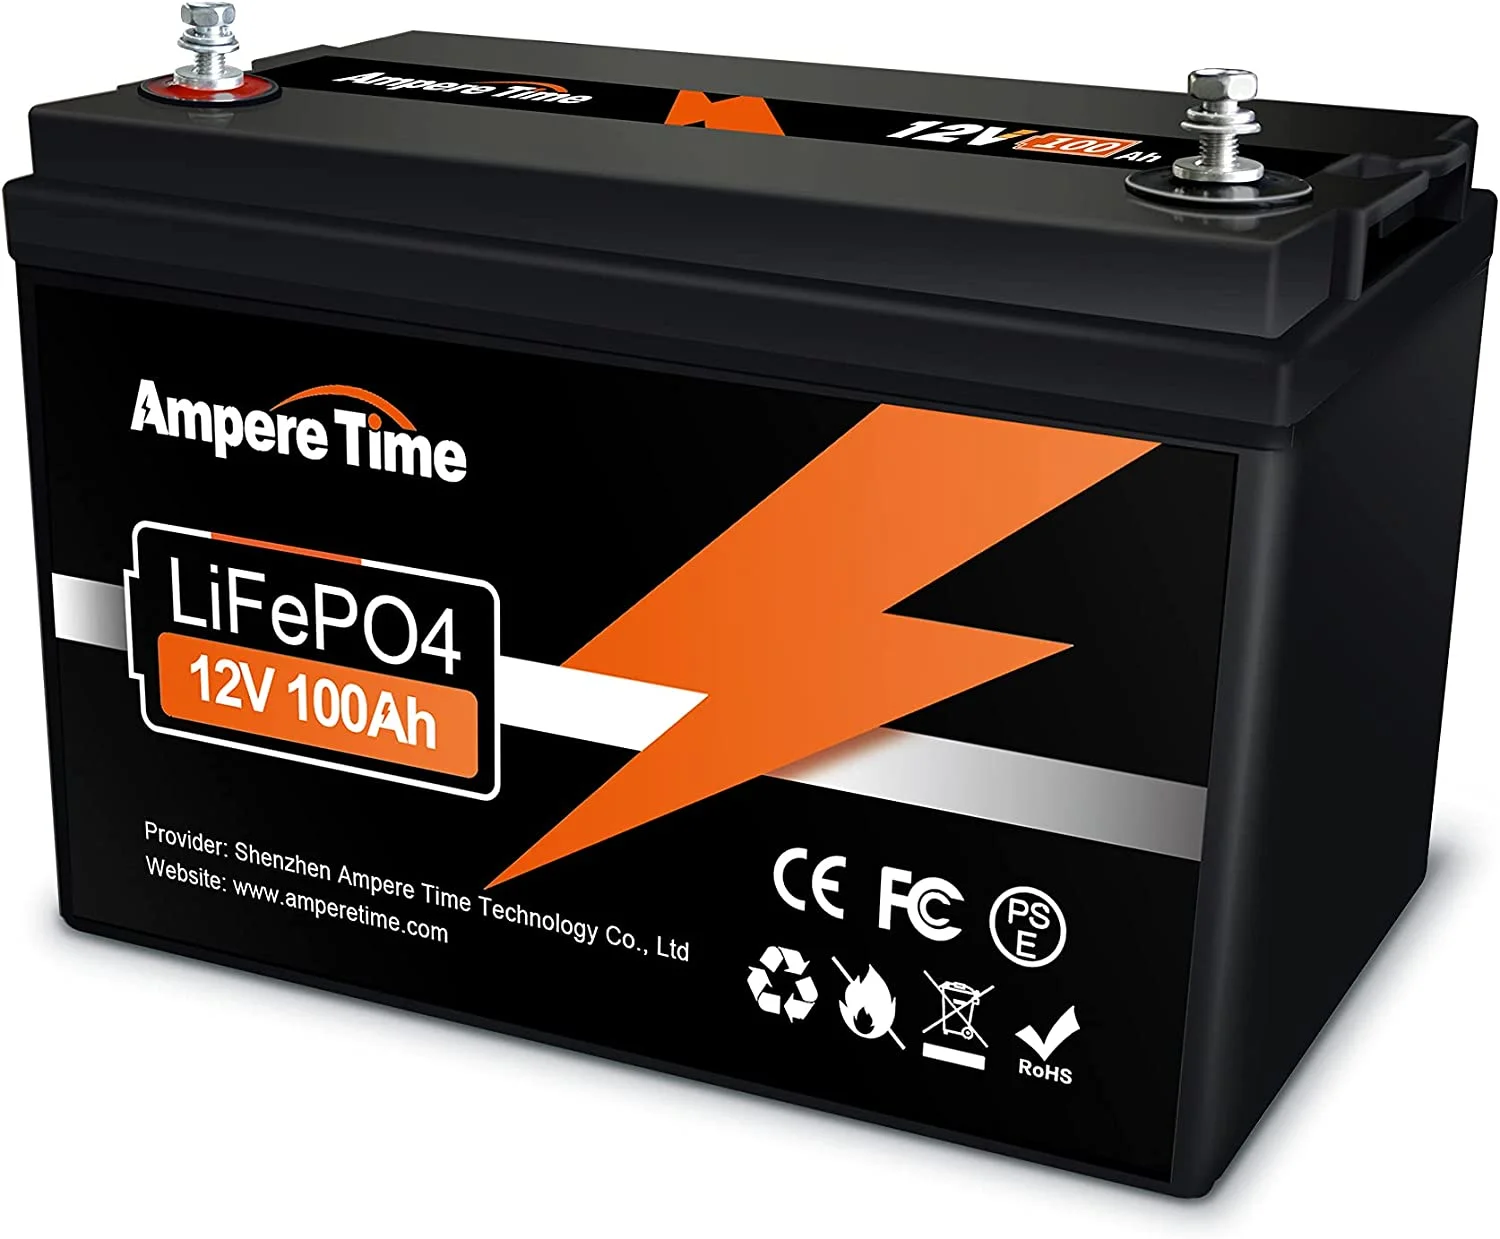 Ampere Time LiFePO4 12v 100ah Battery